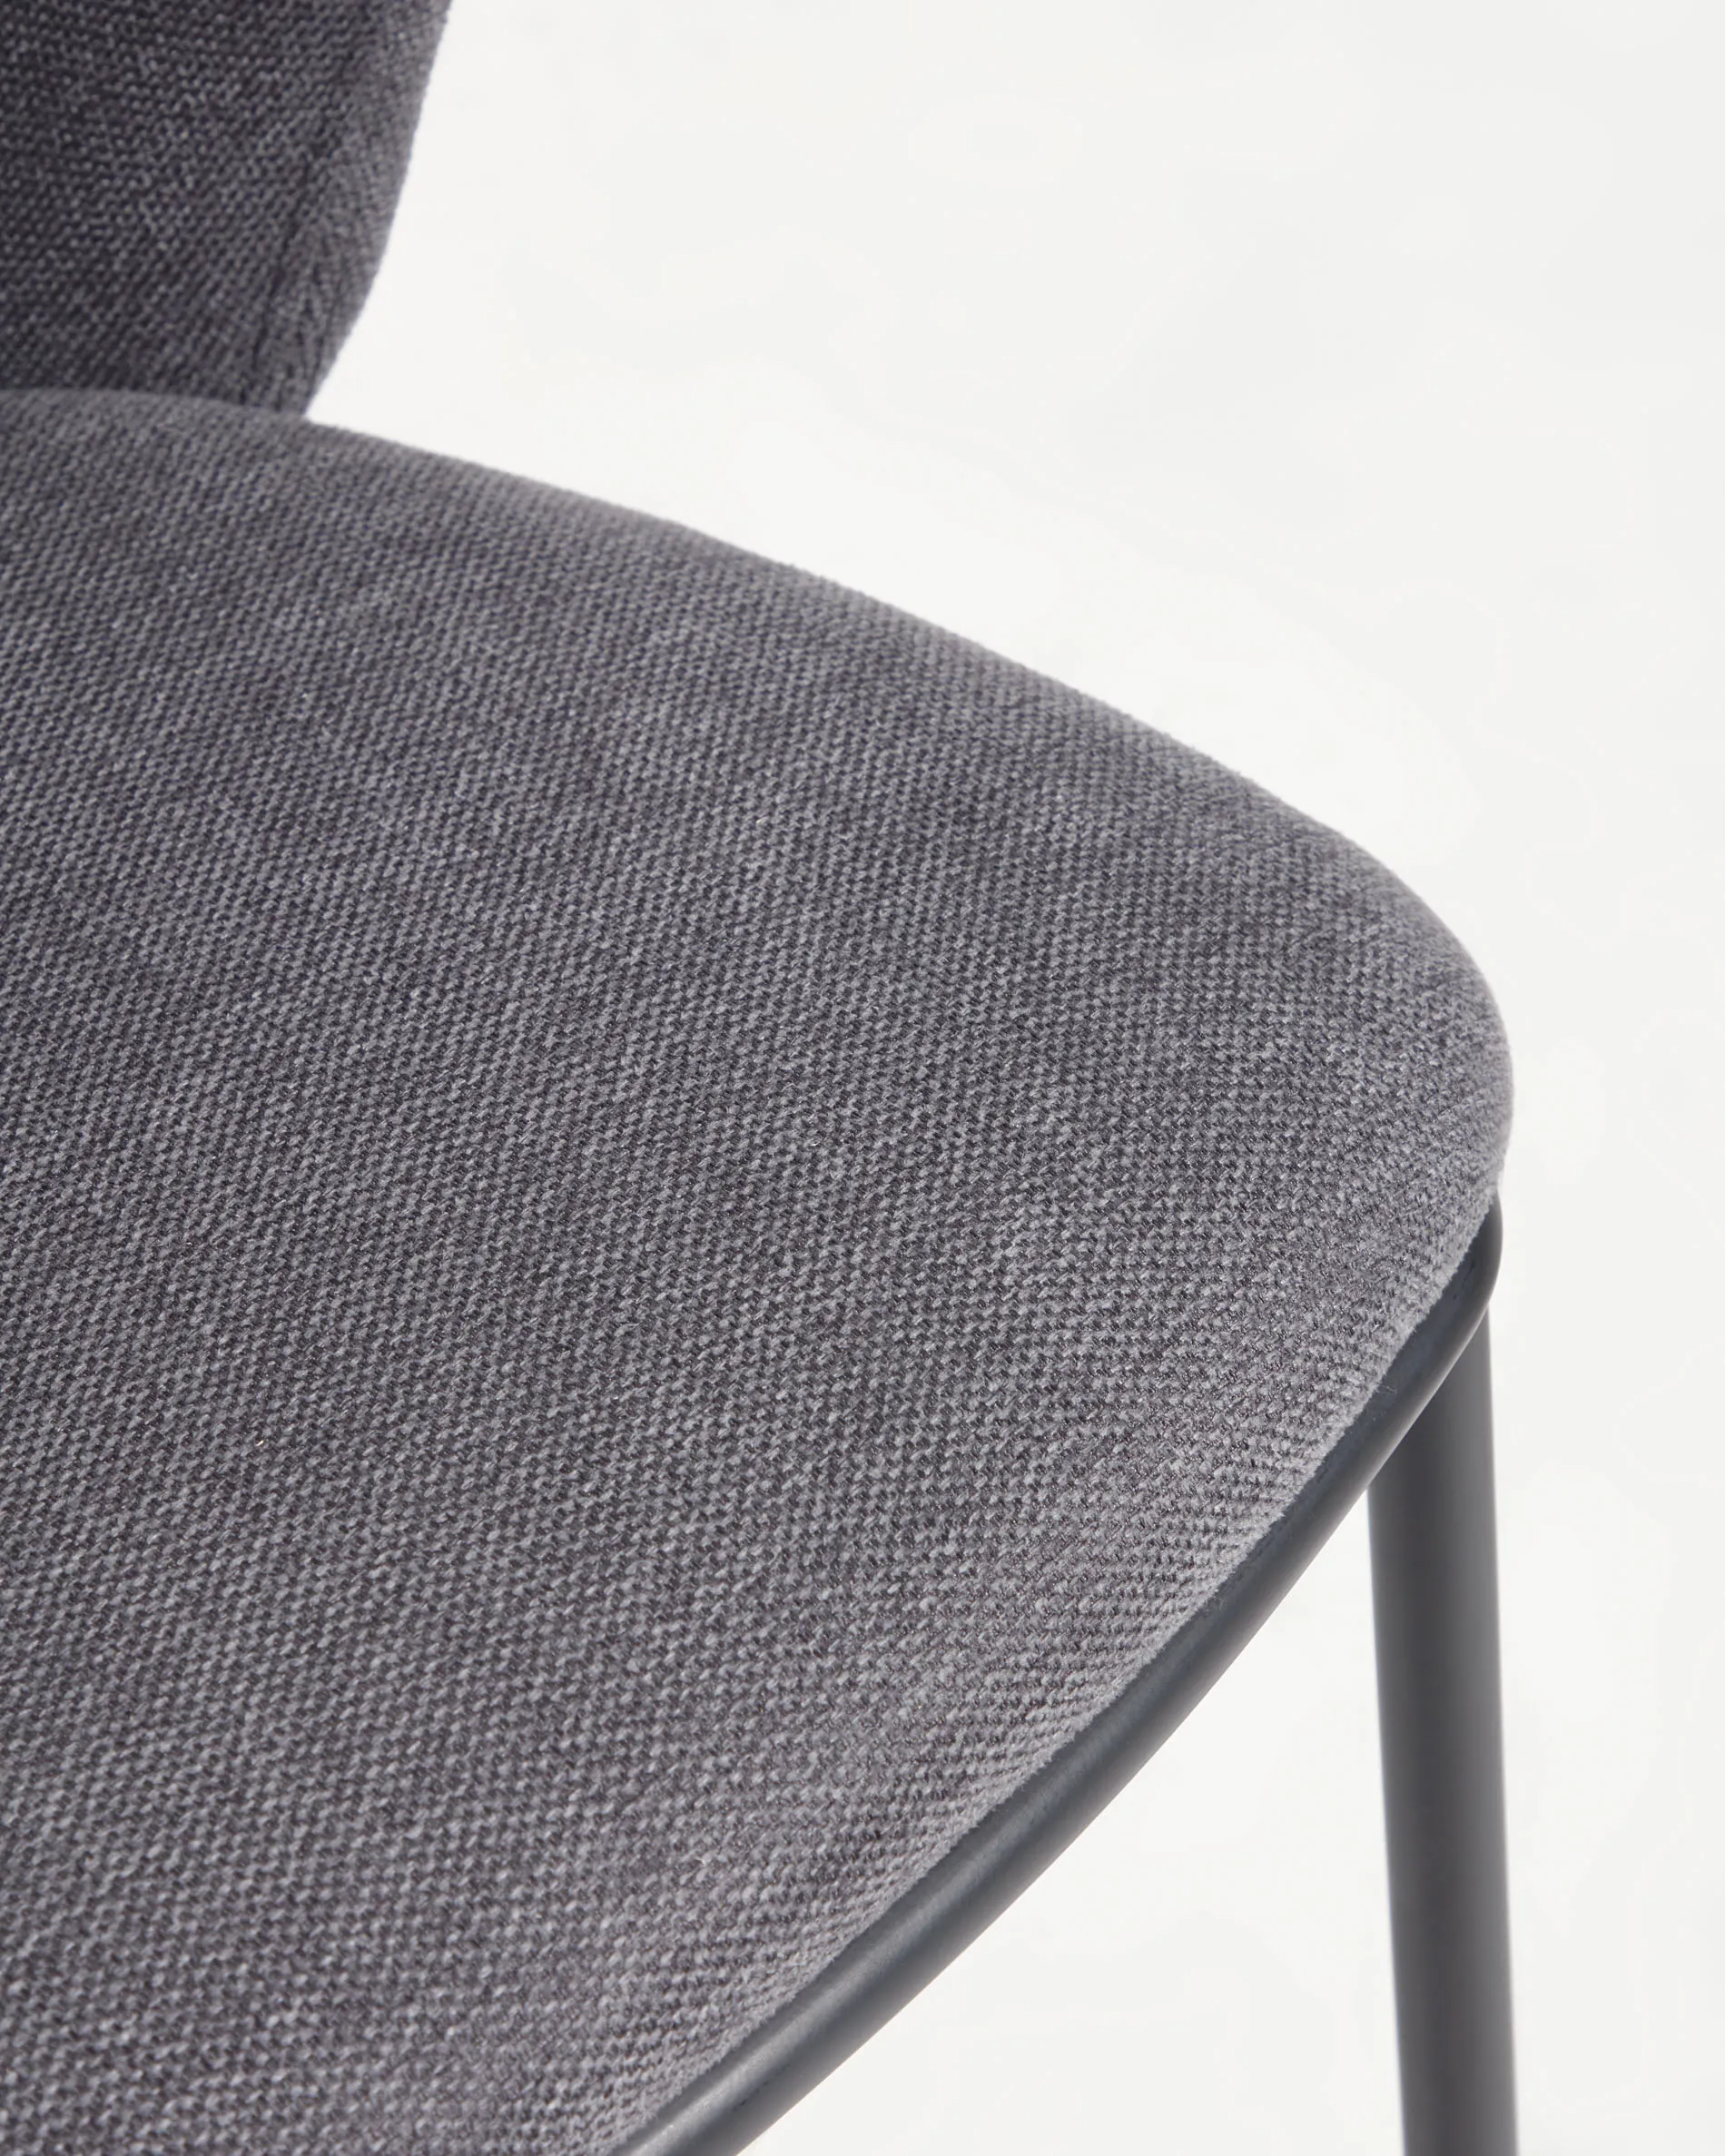 Полубарный стул La Forma Ciselia темно-серый шенилл 65 см 159211